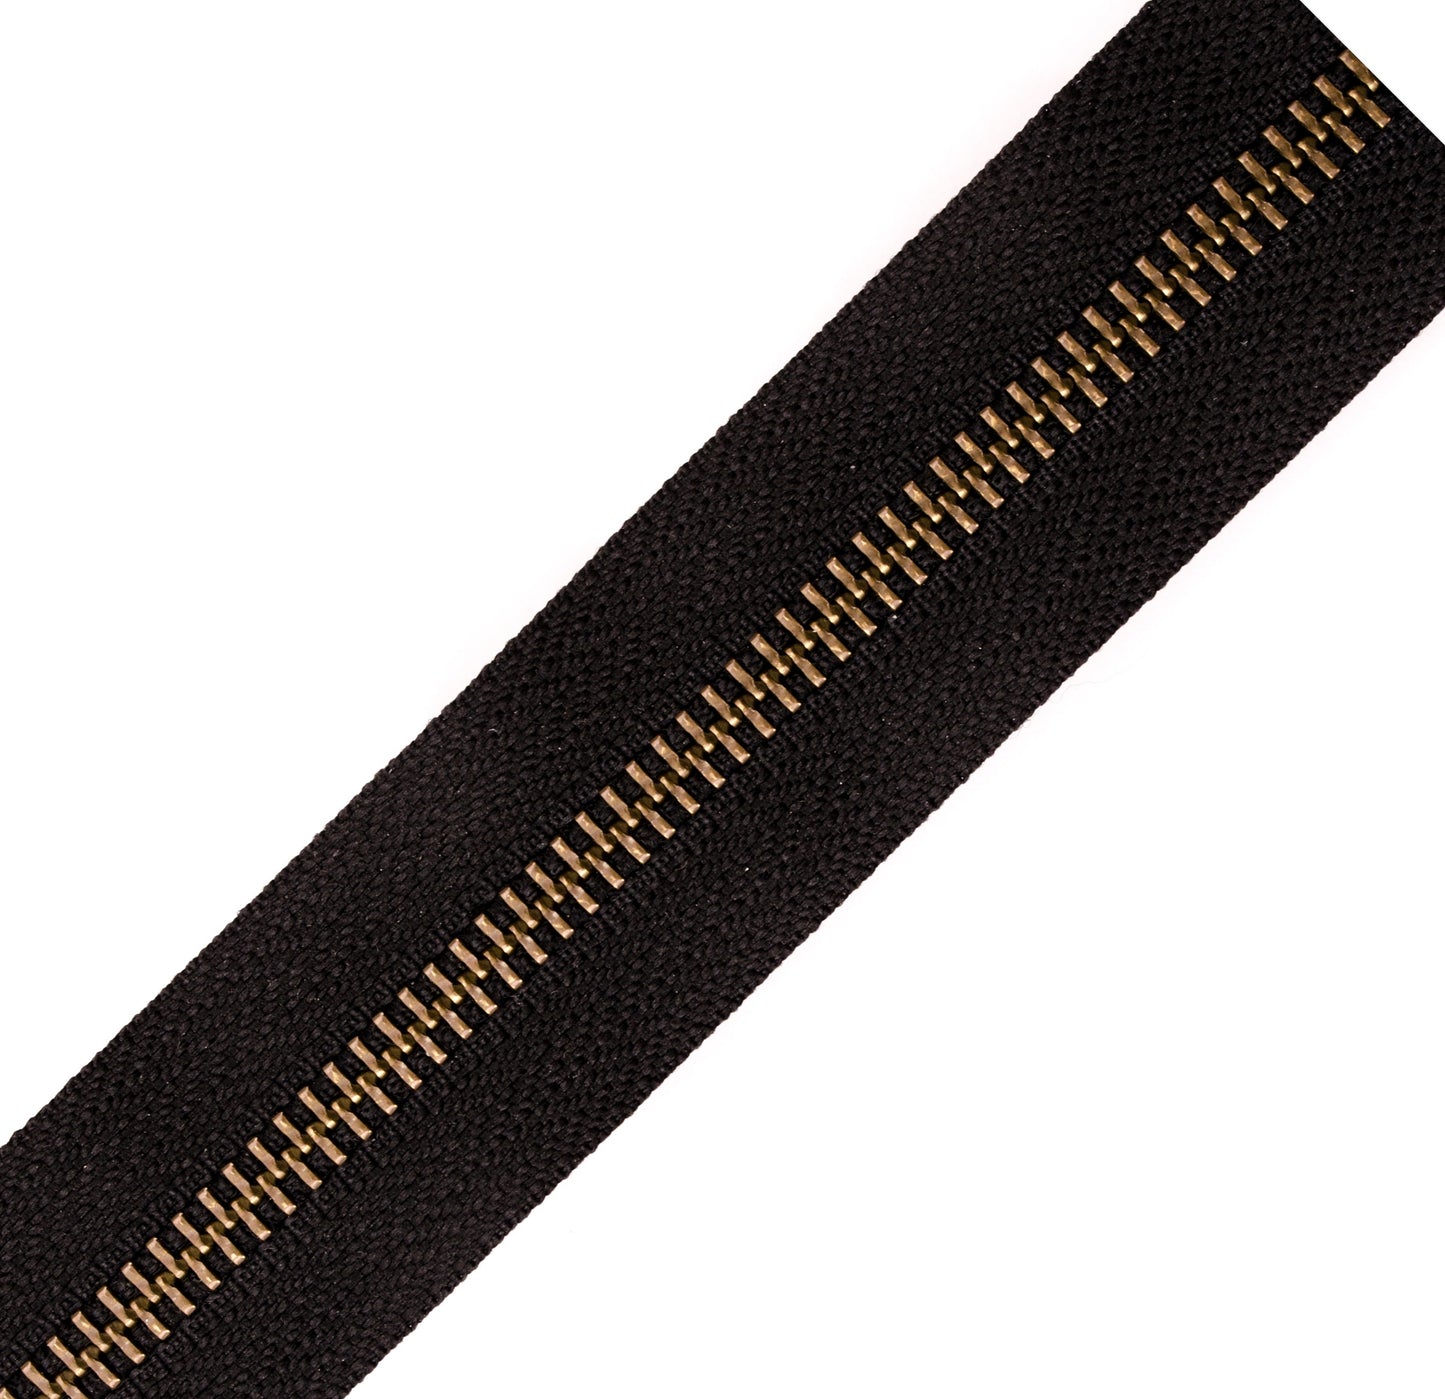 Metal YKK zipper 5RGKB (580) Black